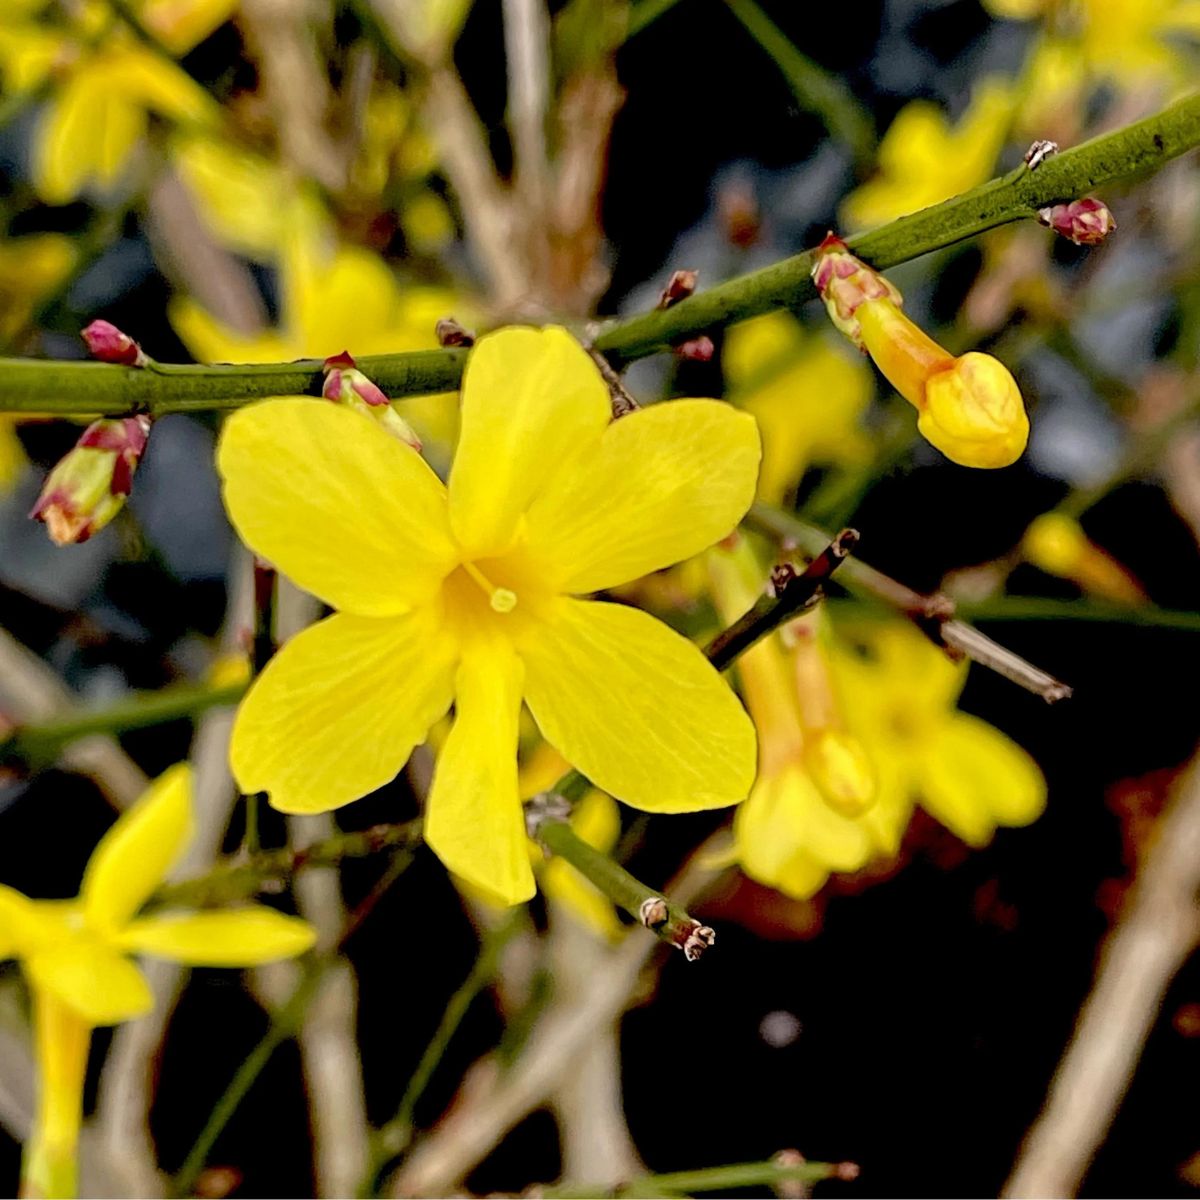 Meet the jasmine flower on Thursd